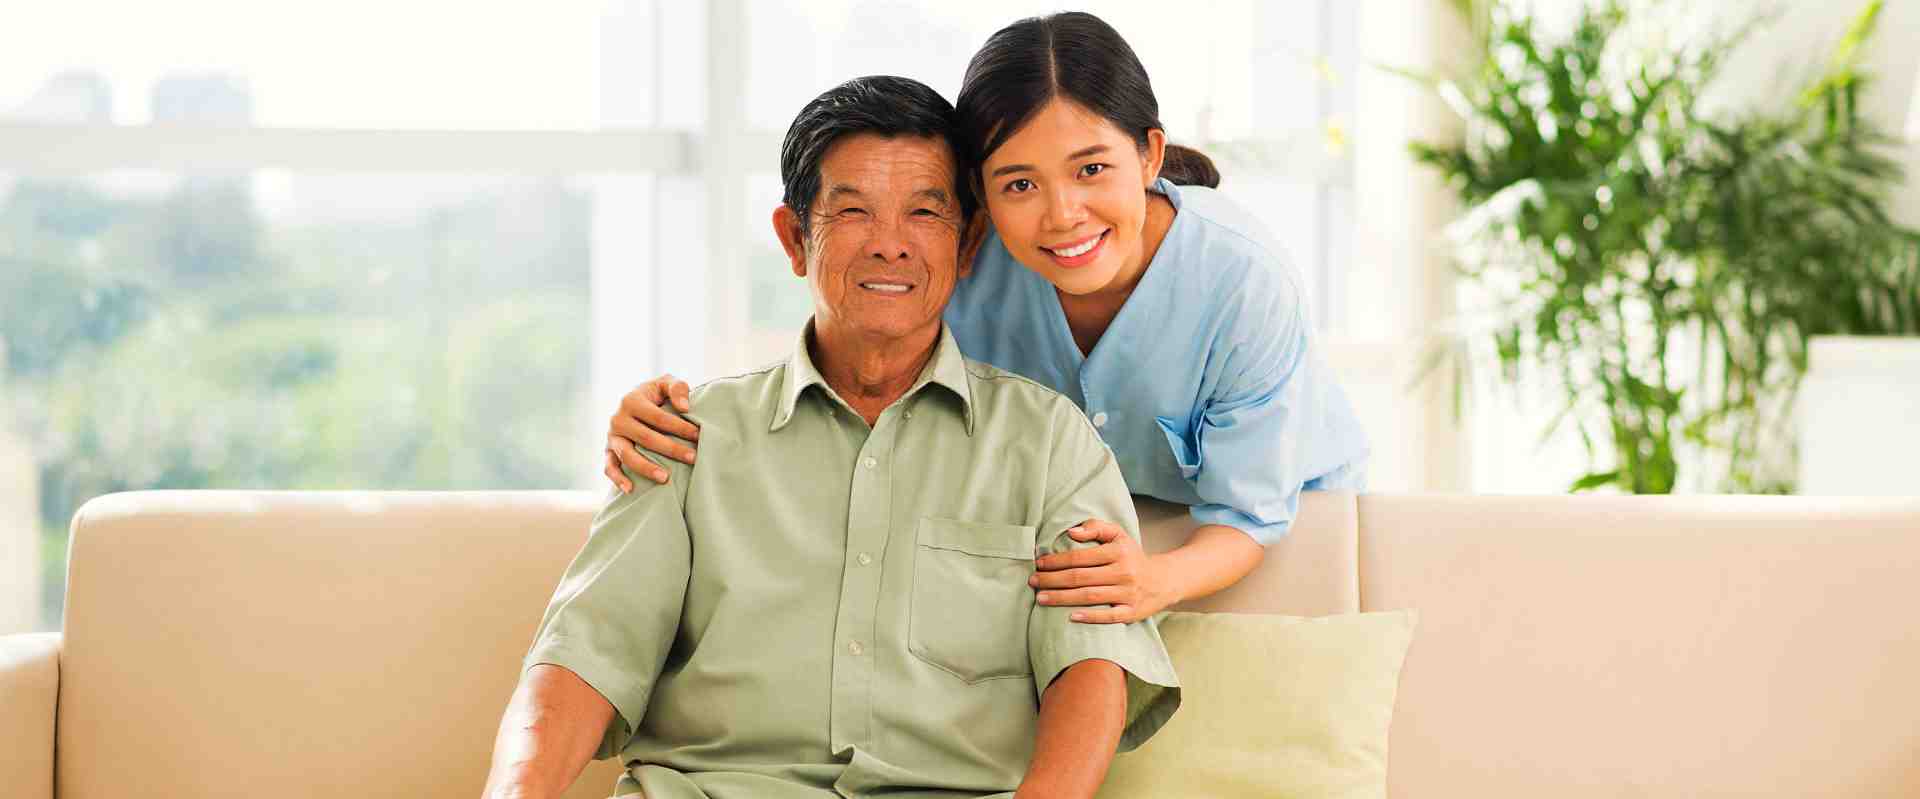 caregiver and her senior patient